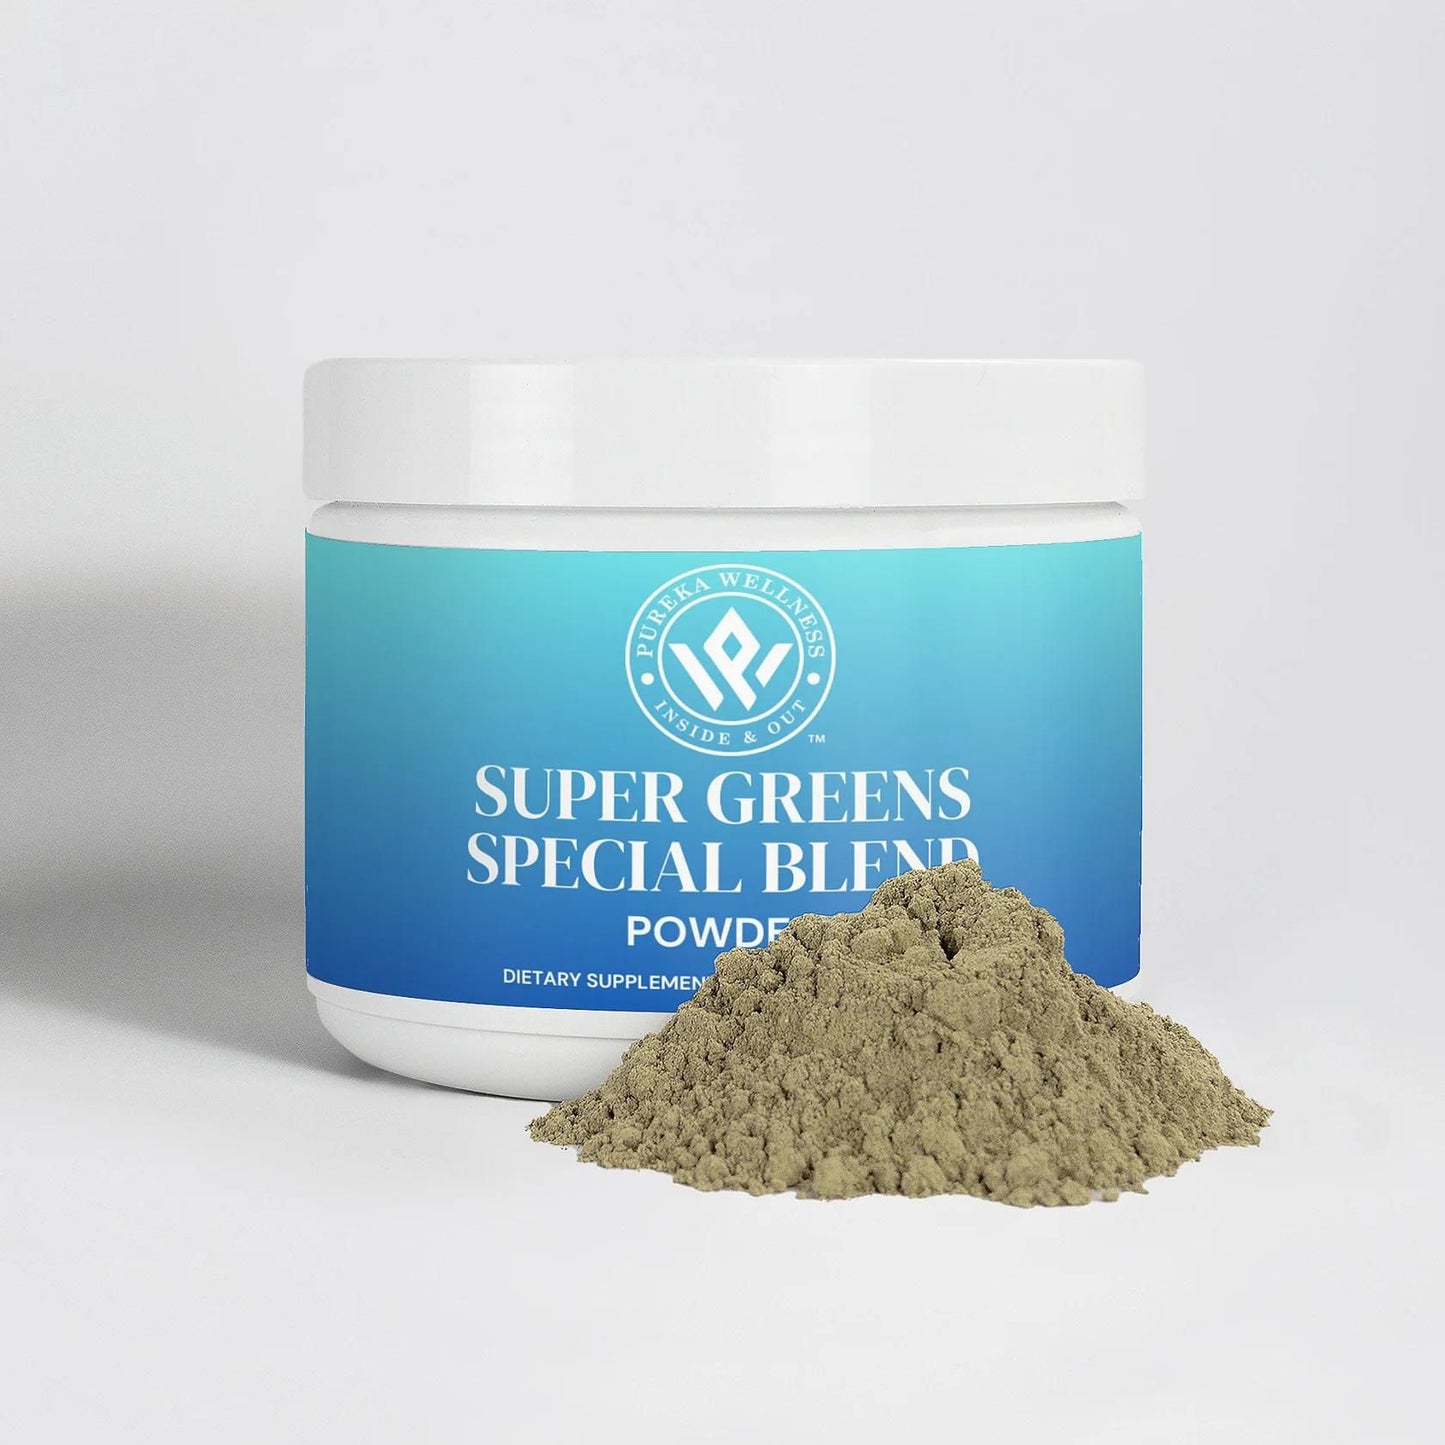 Super Greens Special Blend Powder